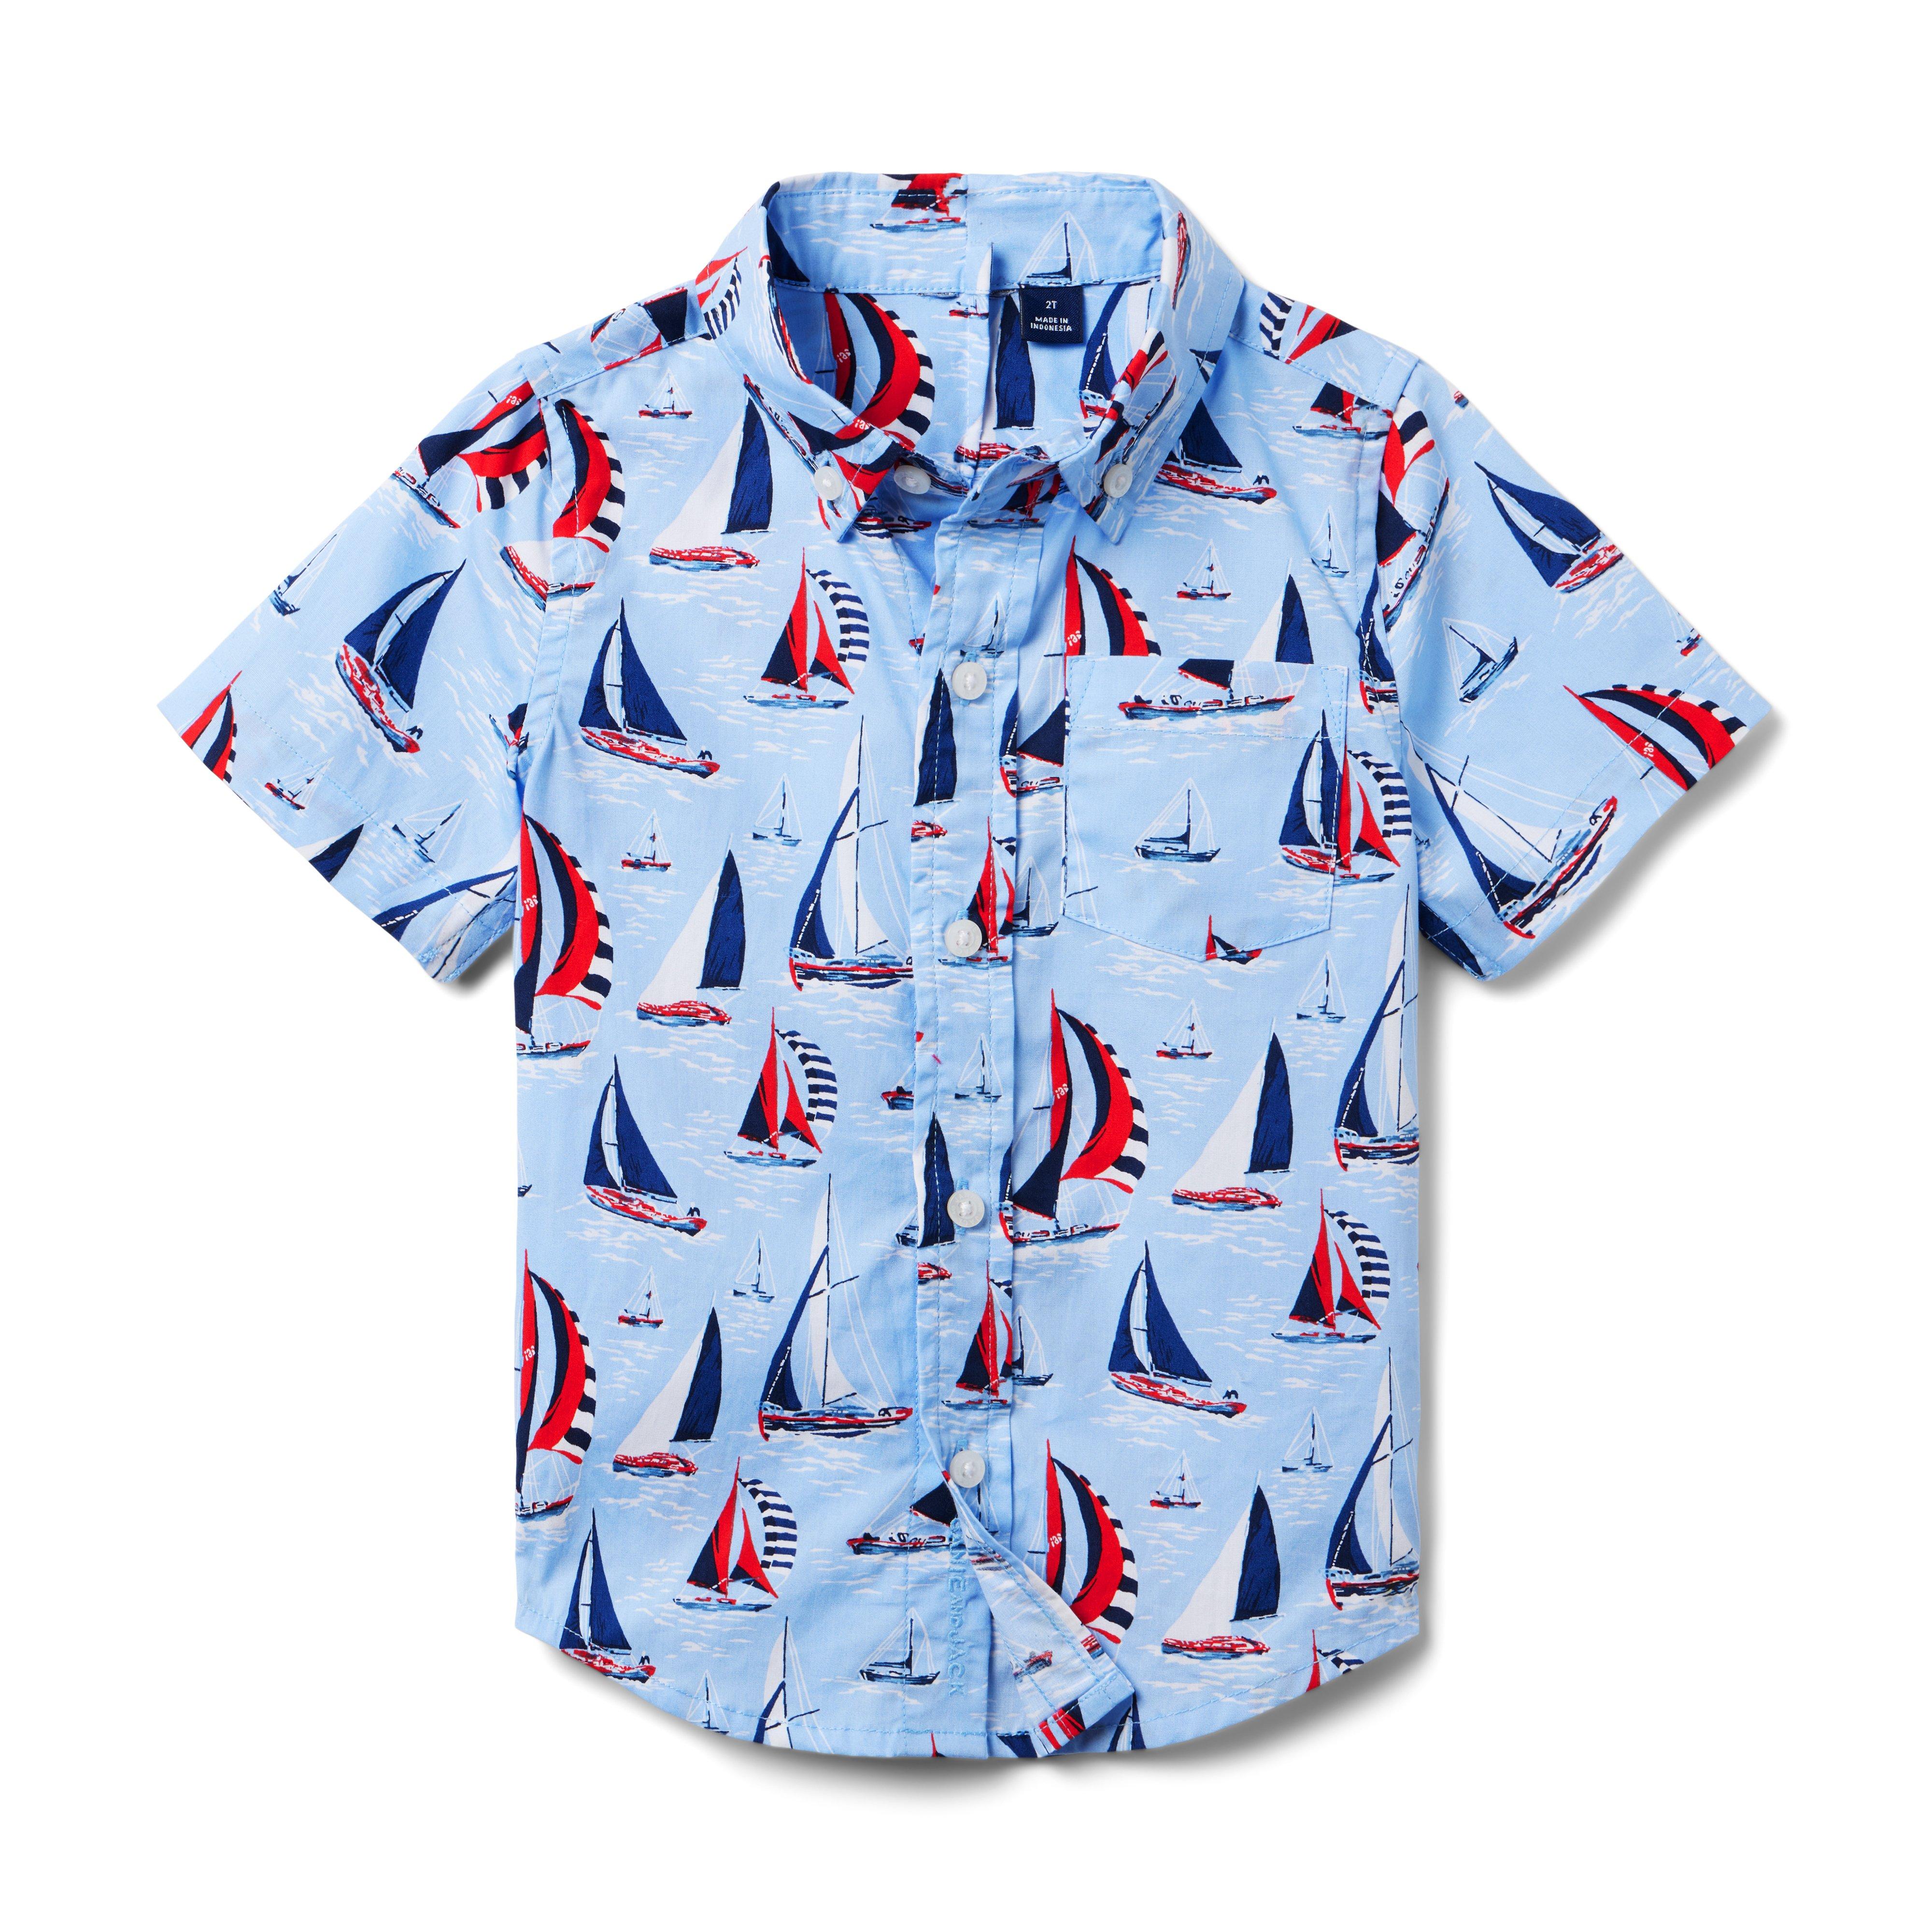 The Sailboat Poplin Shirt